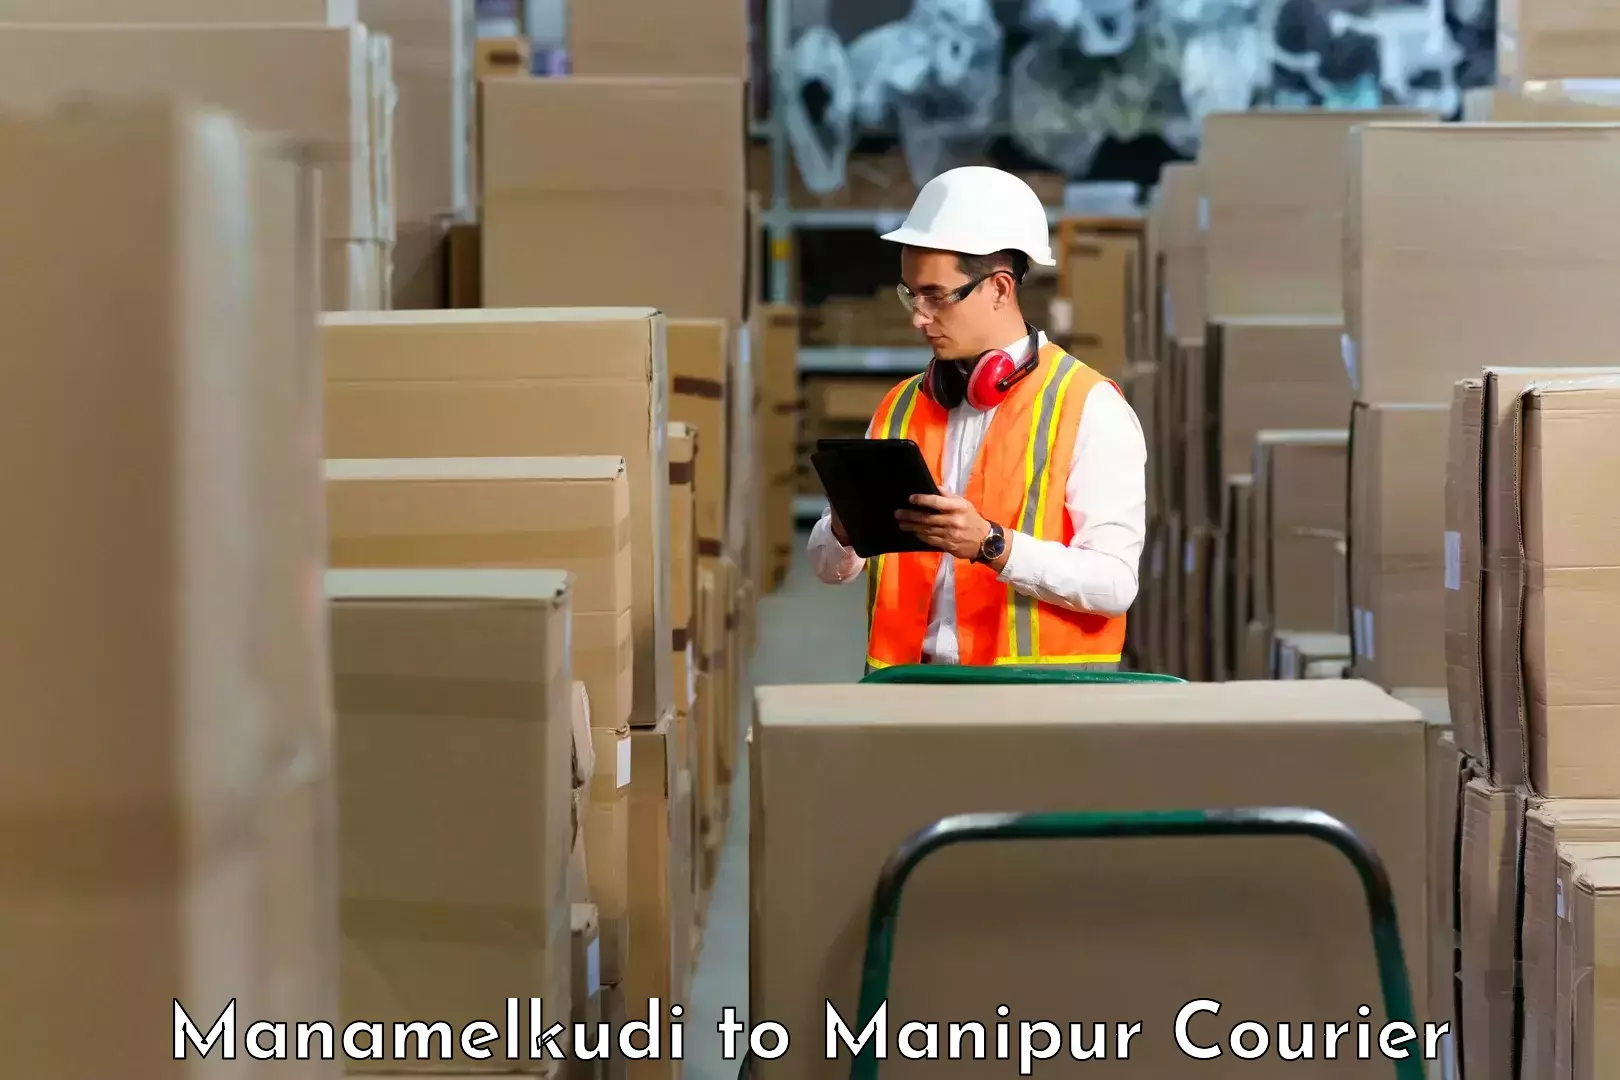 Customer-focused courier Manamelkudi to Manipur